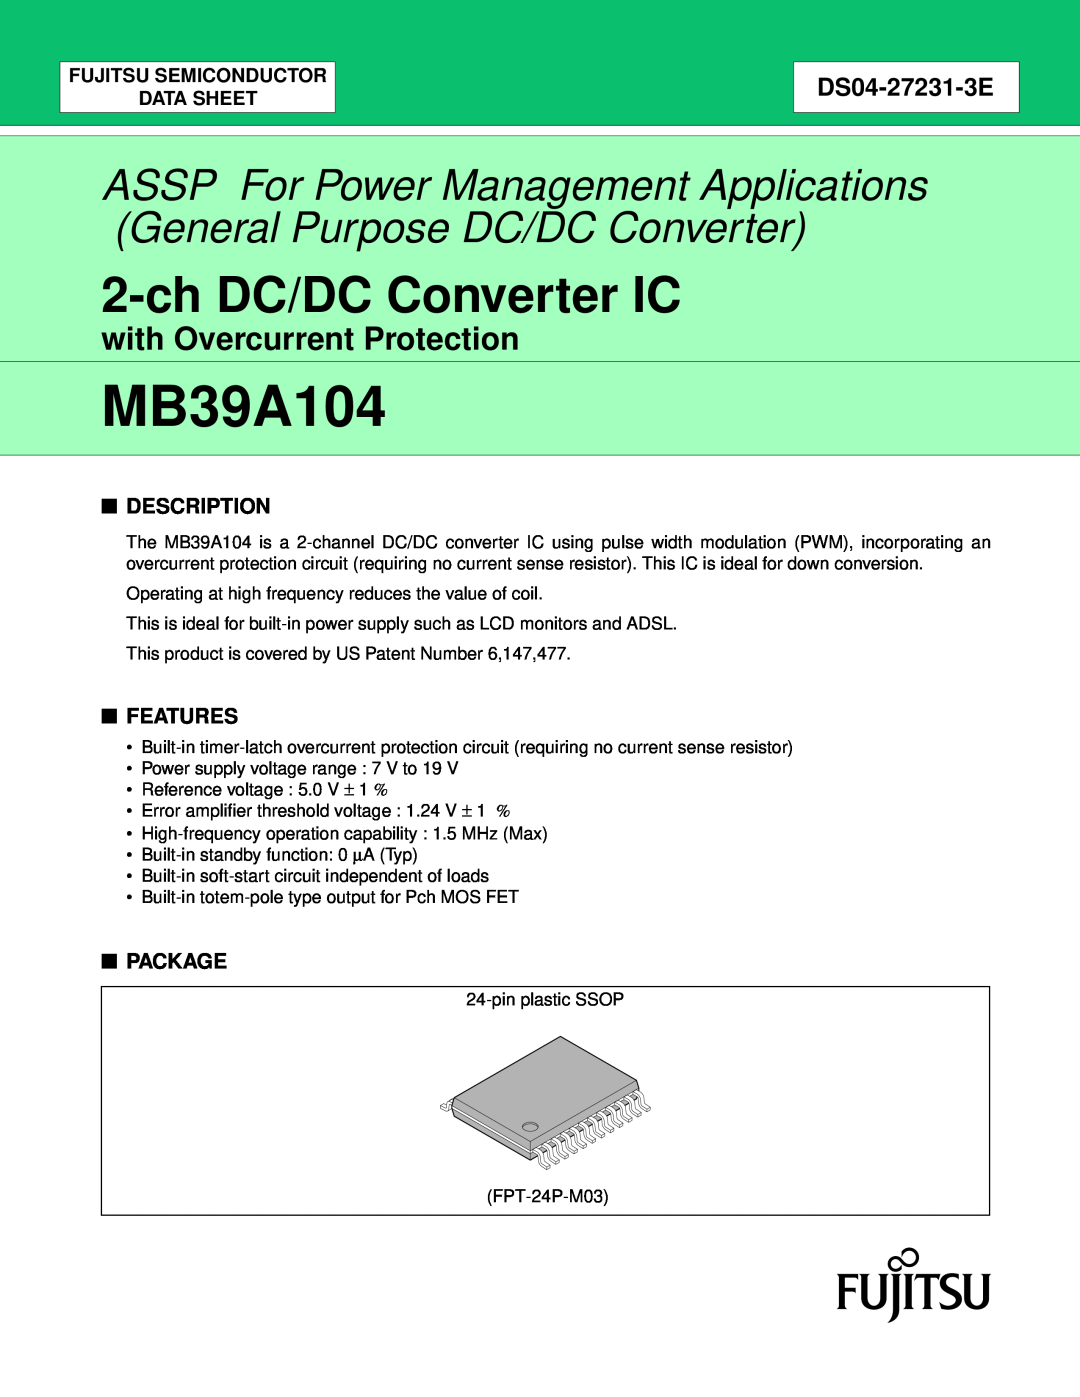 Fujitsu MB39A104 manual Description, Features, Package, Fujitsu Semiconductor Data Sheet, ch DC/DC Converter IC 